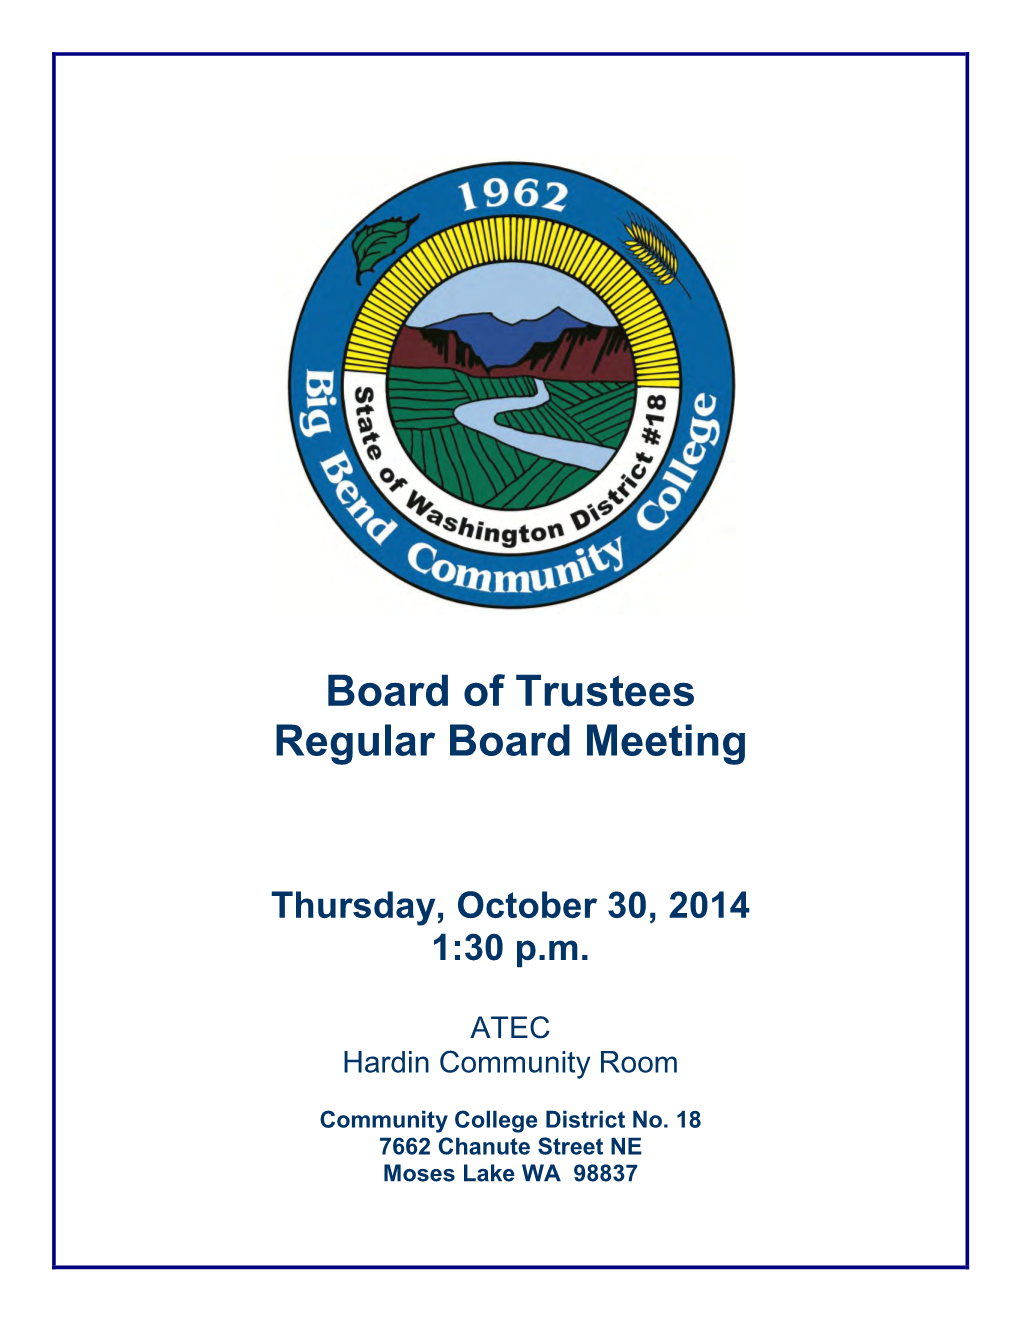 Board of Trustees Regular Board Meeting